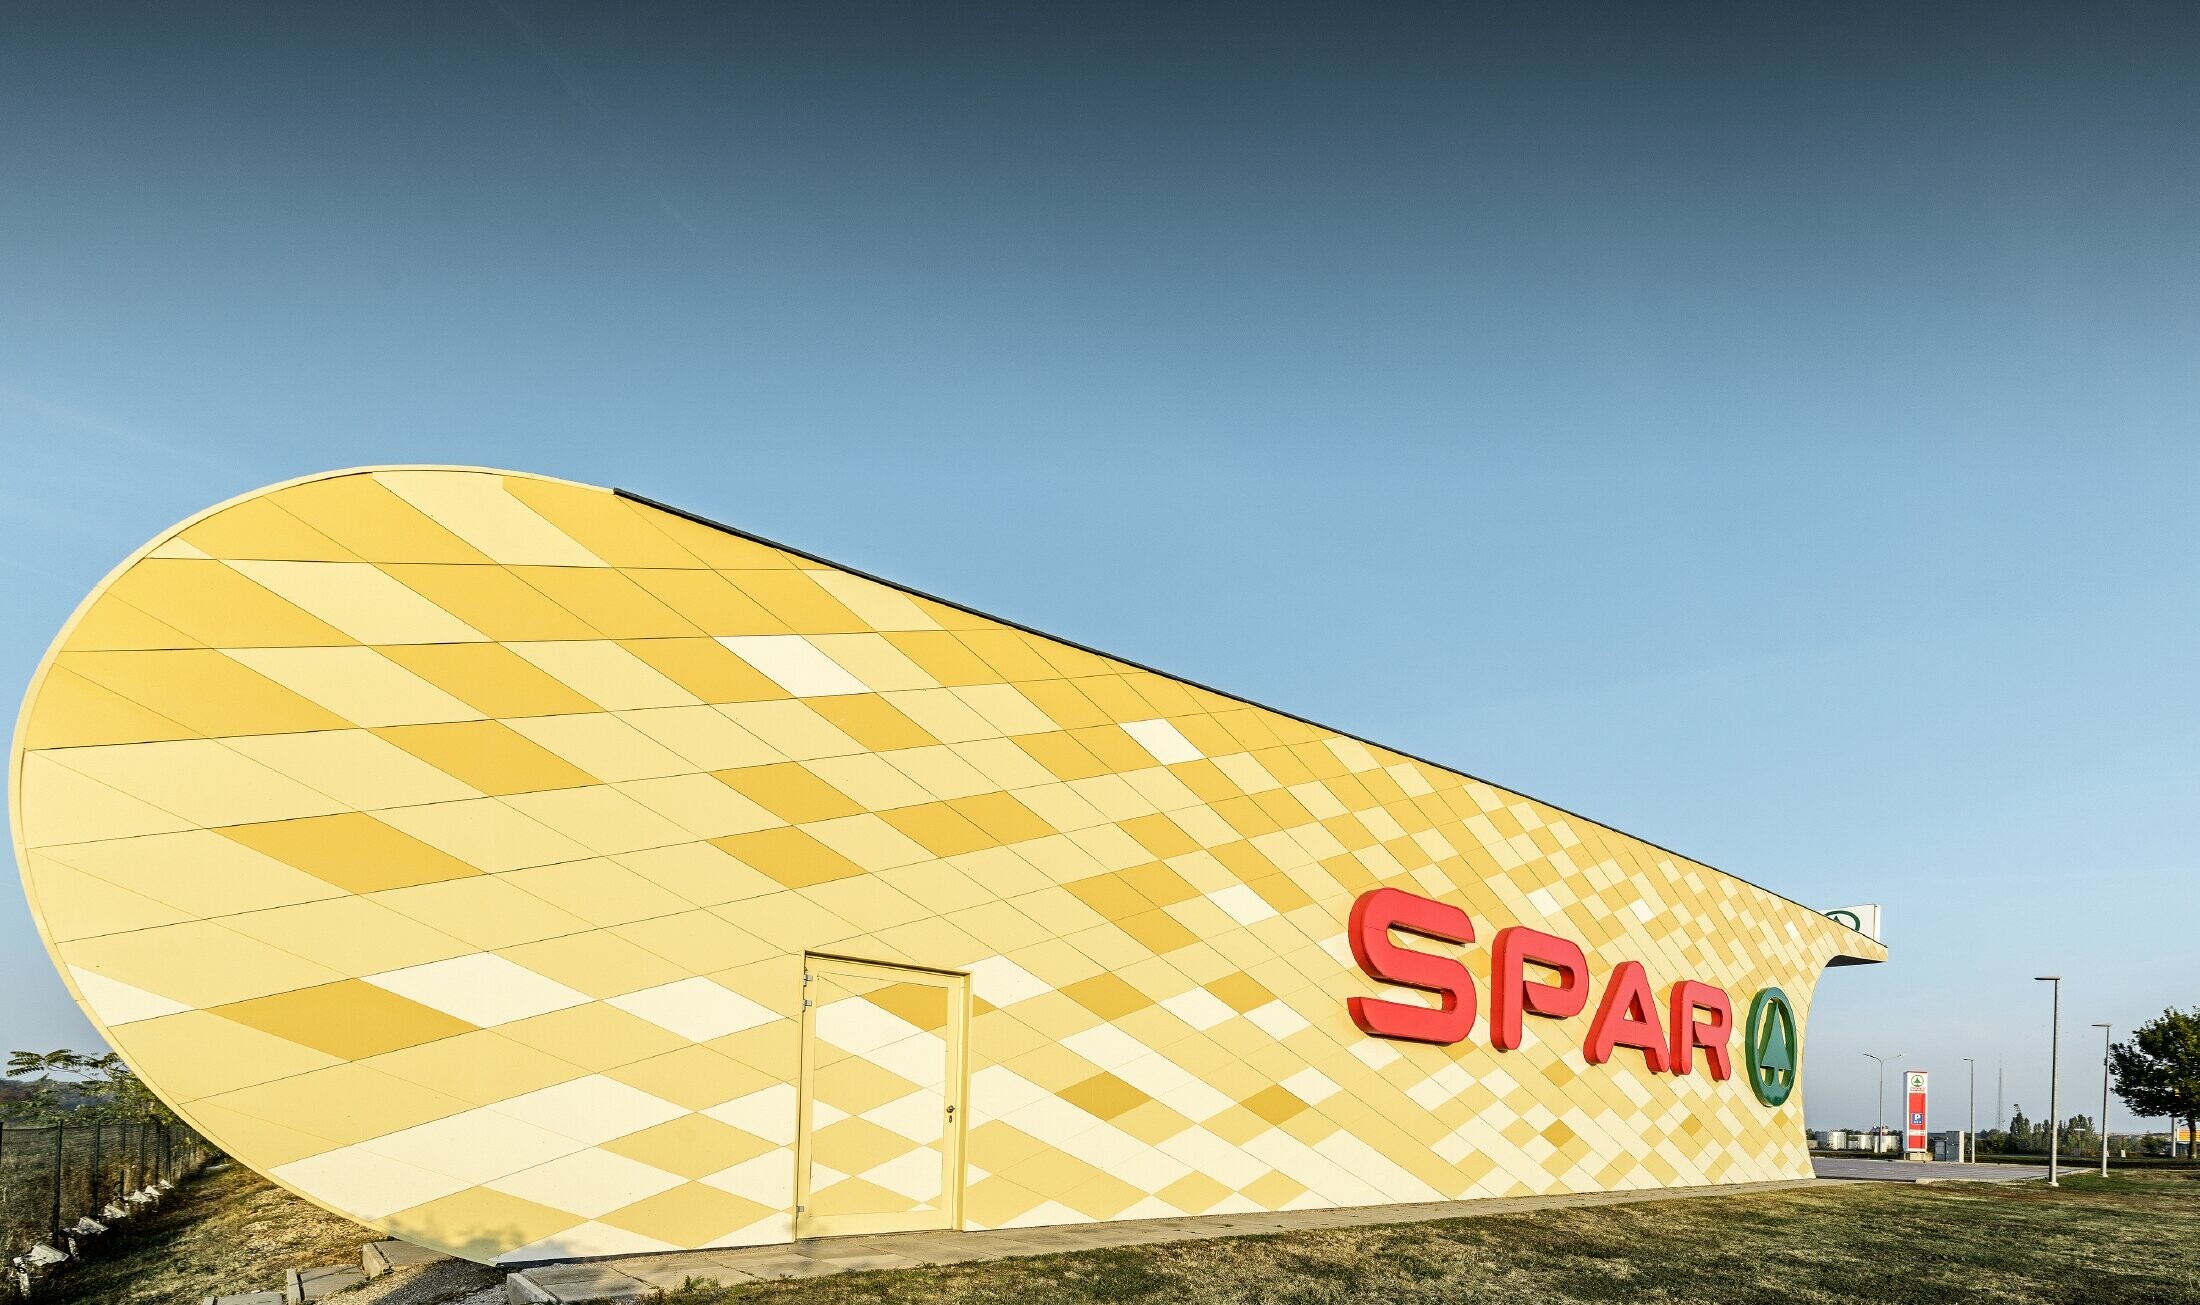 Spar-supermarkt met aluminiumgevel in ruitvormige, geel-oranje composietplaten en Spar-logo